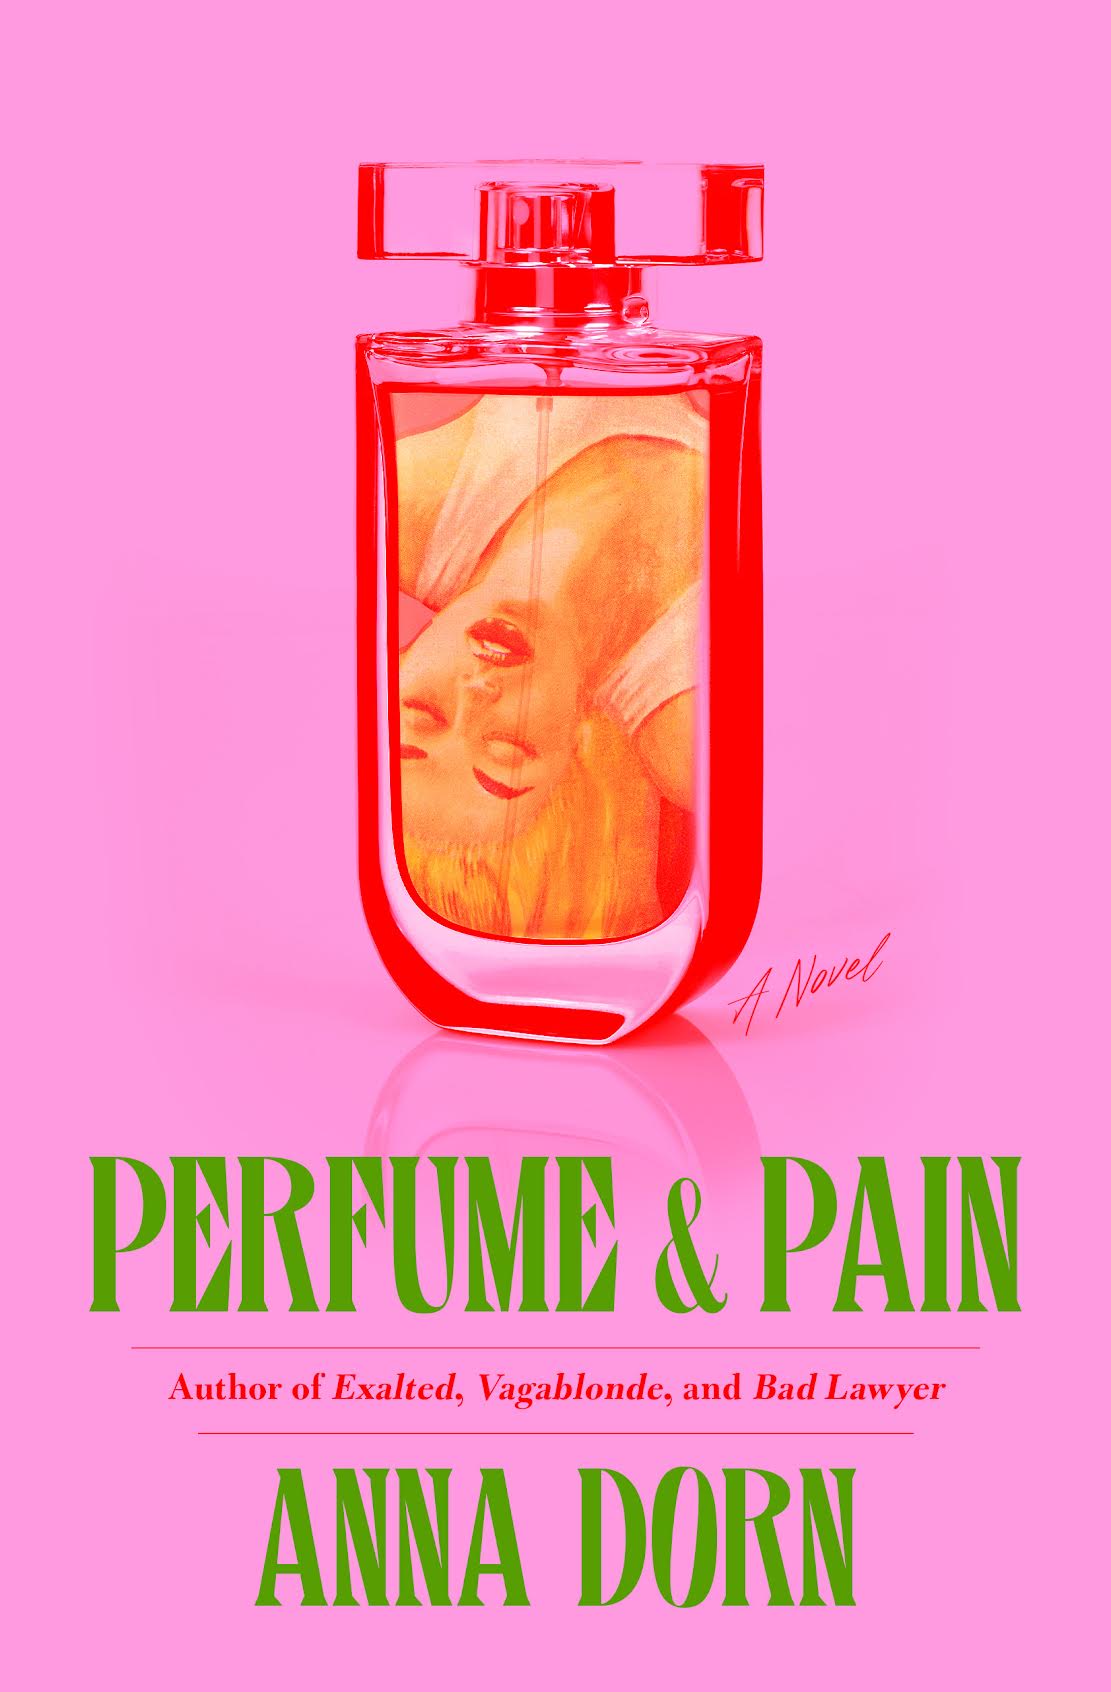 Book Launch: Perfume & Pain by Anna Dorn